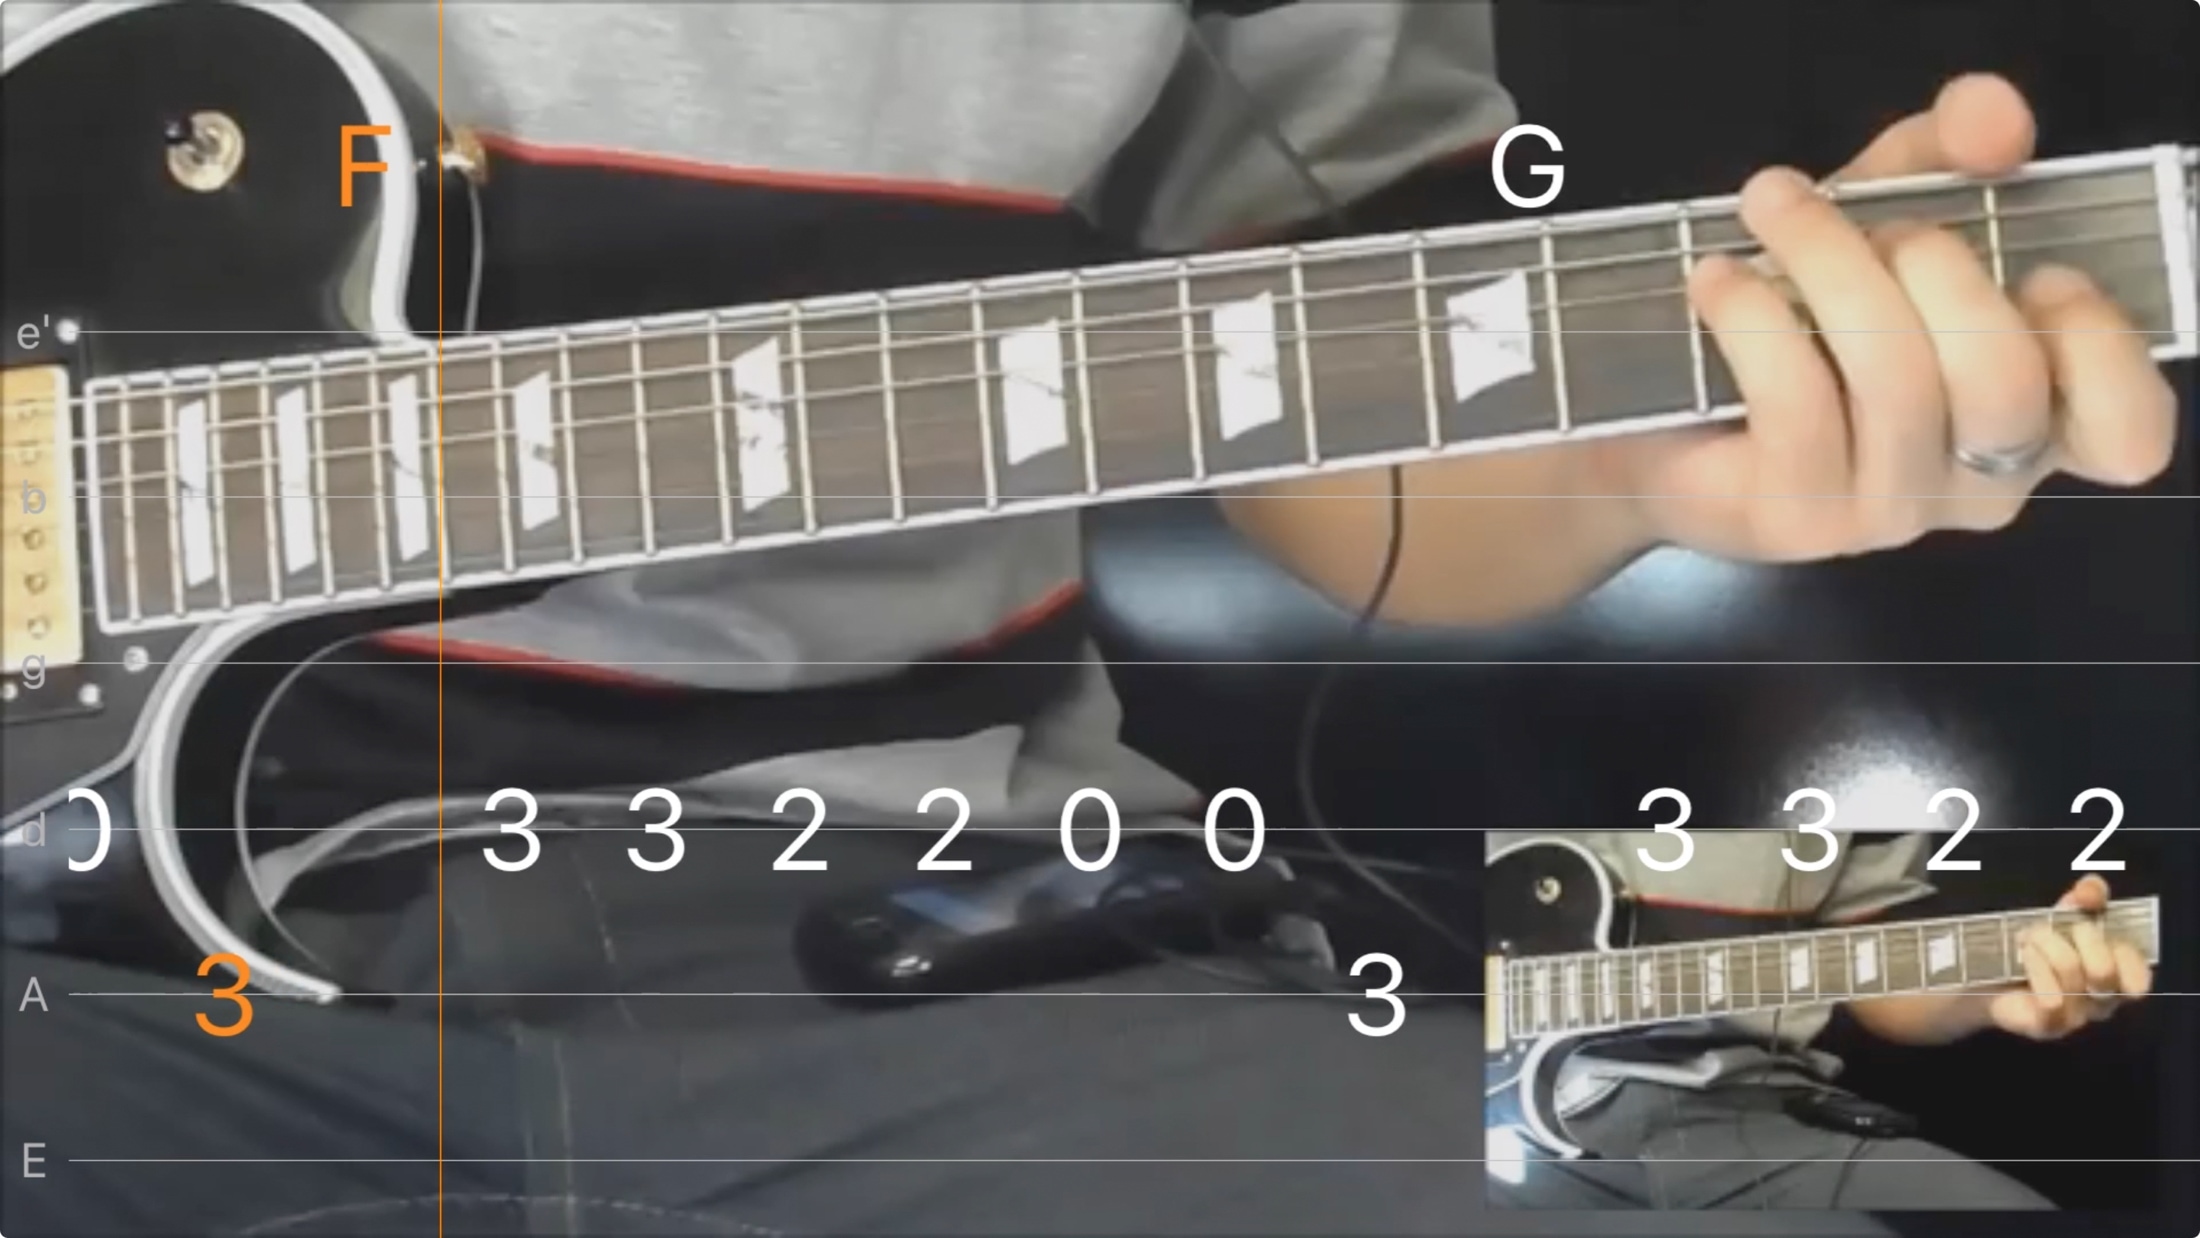 Woodshed - Apple TV Guitar Videos Tab